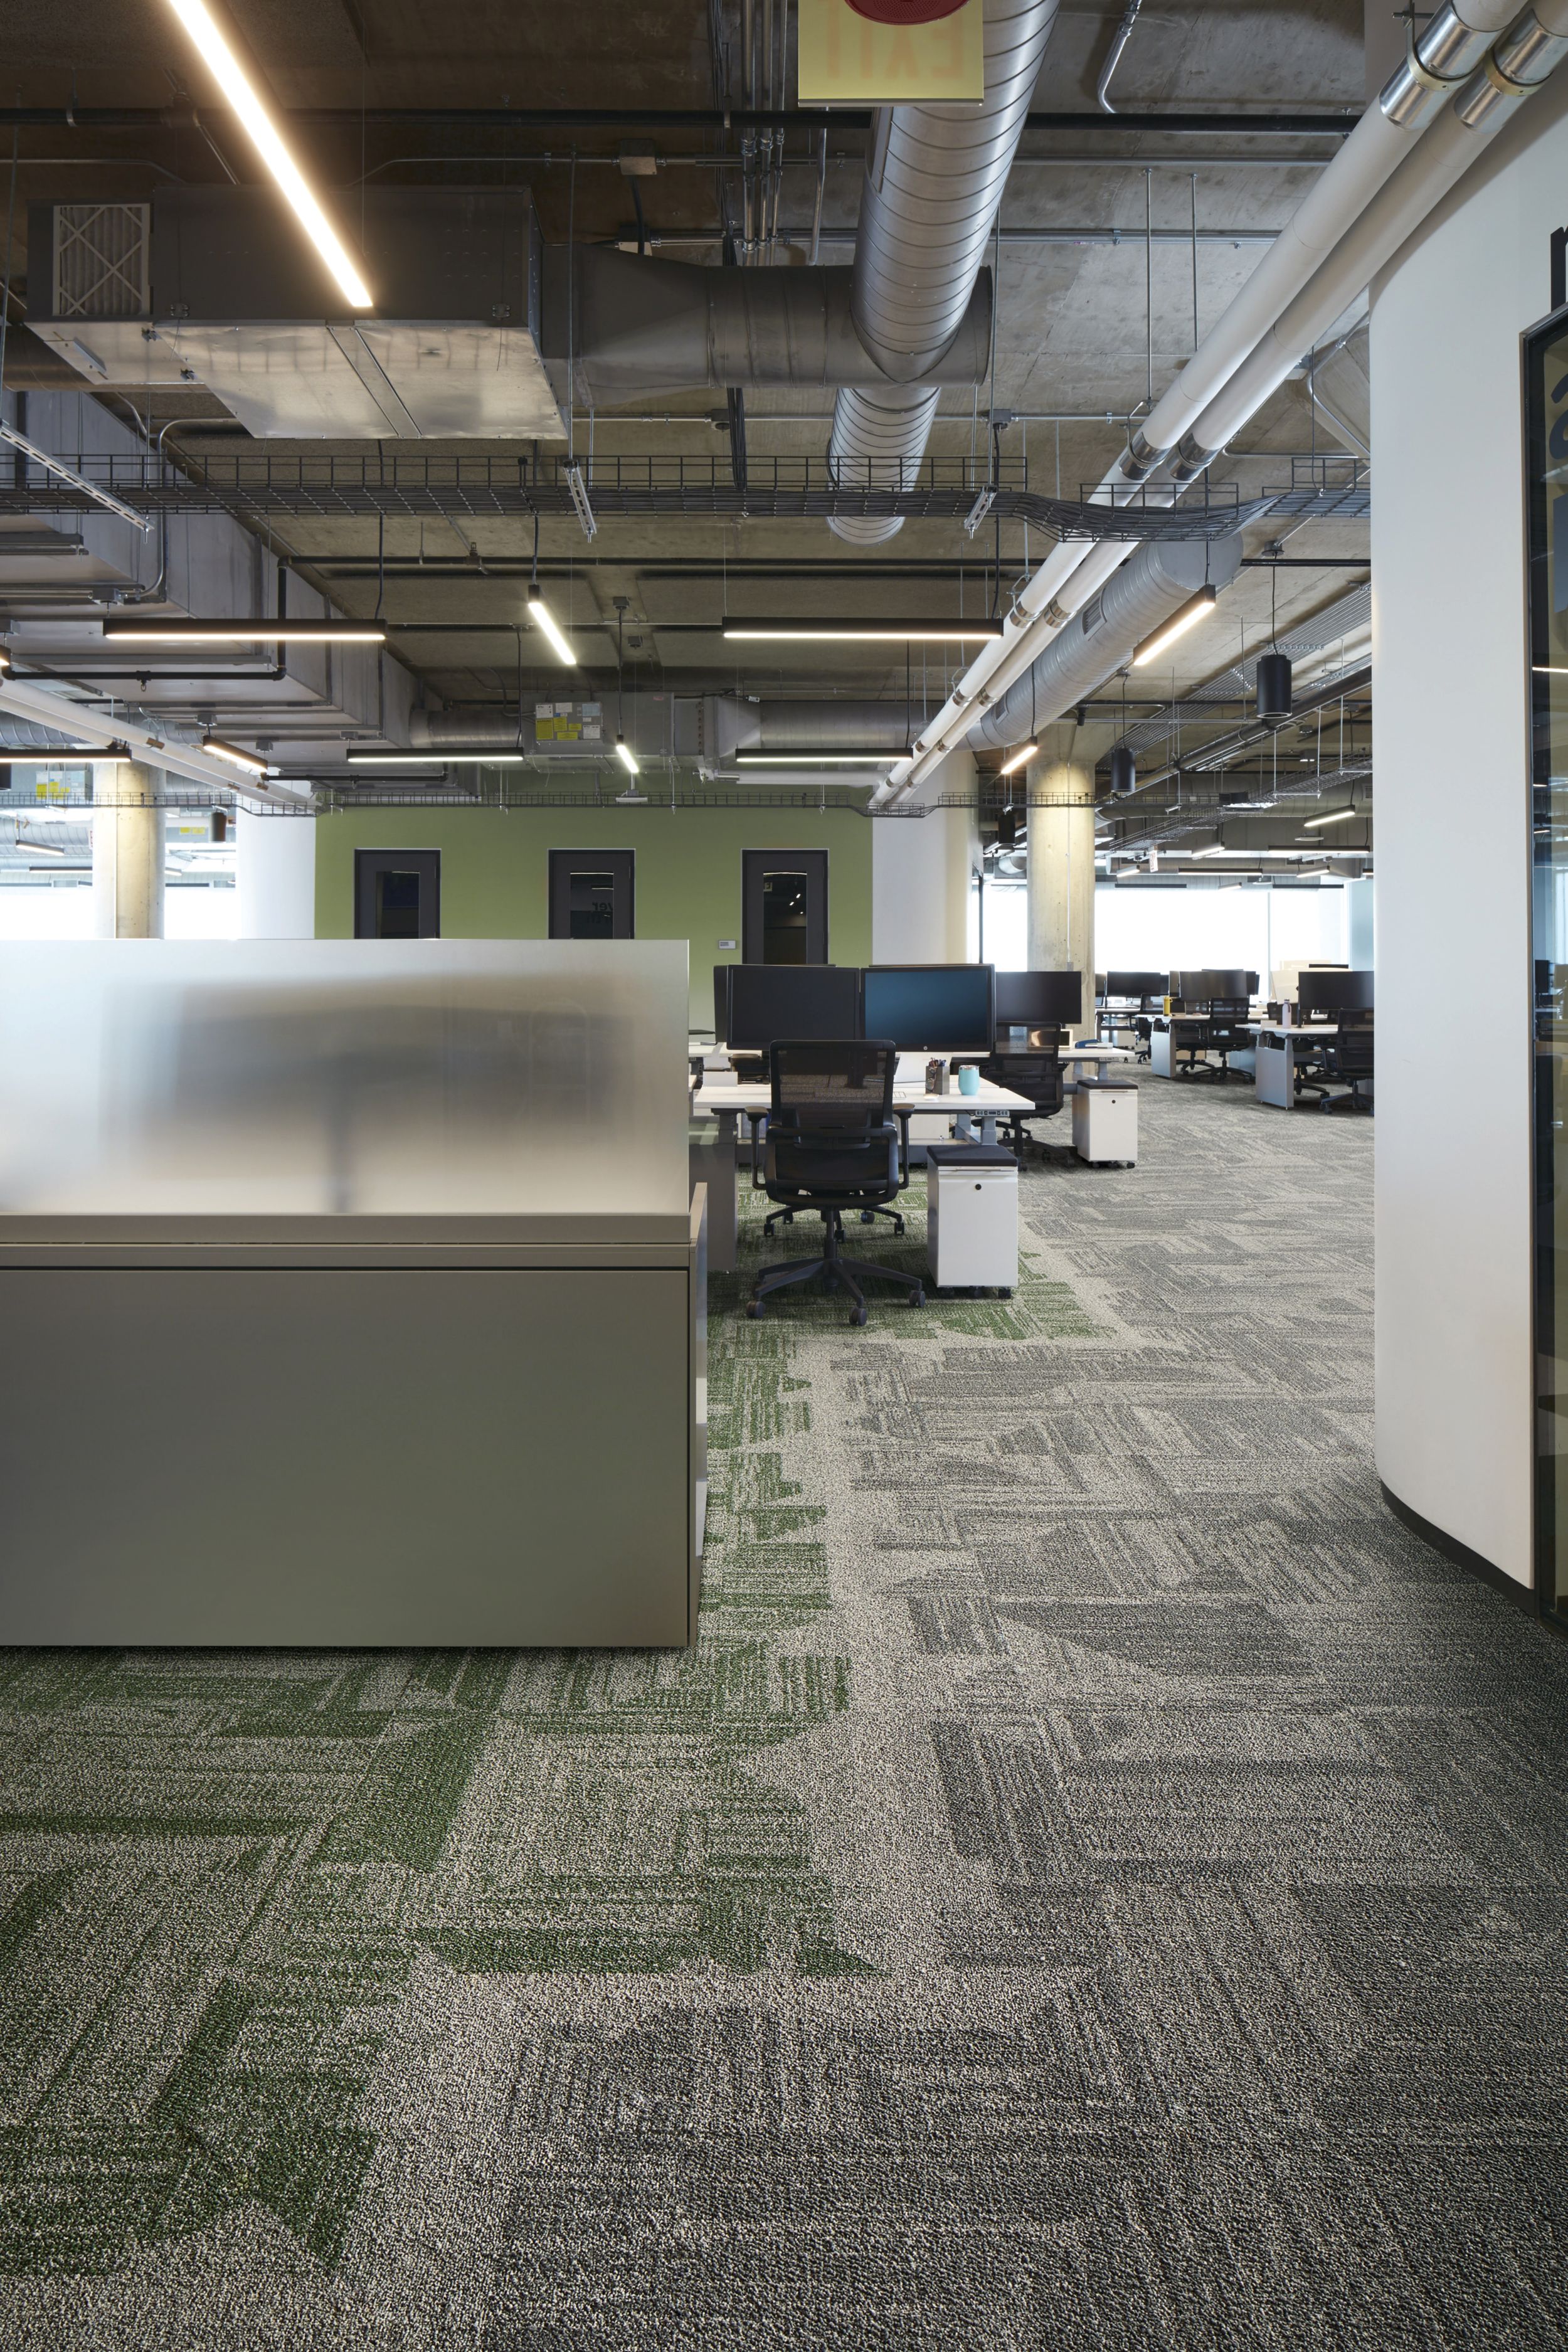 Interface Open Air 403 carpet tile in open office workspace area with multiple work stations número de imagen 6